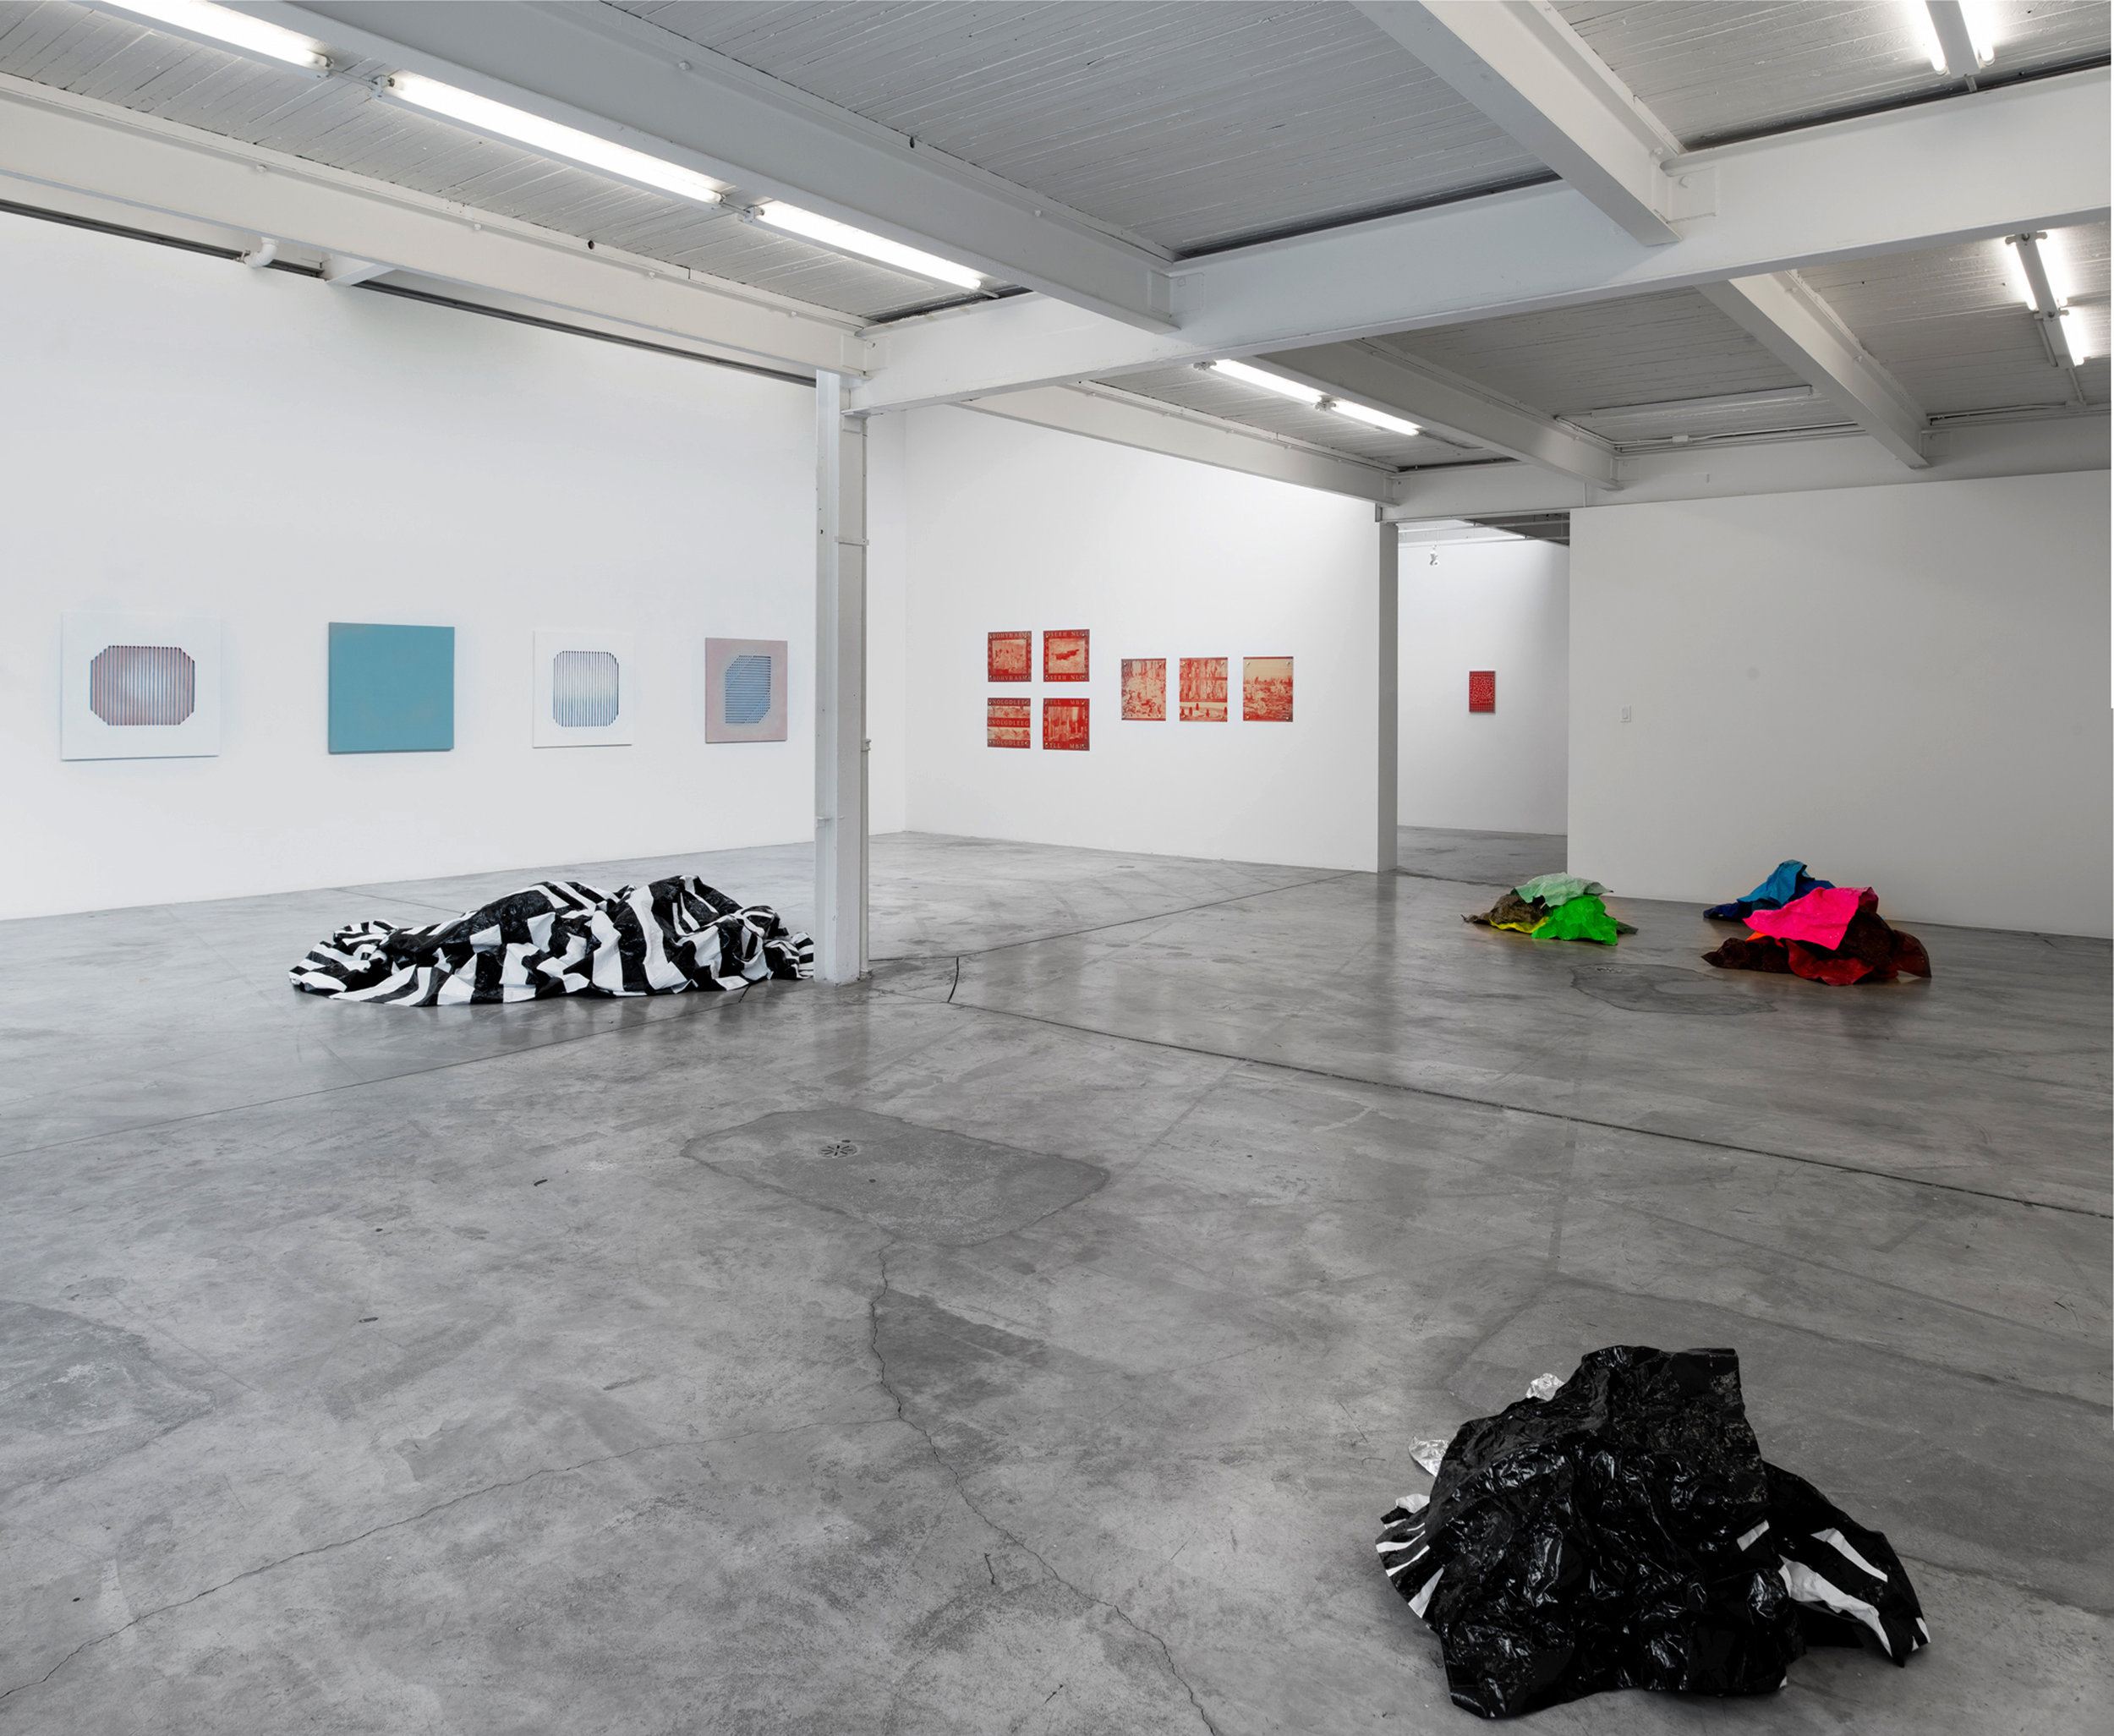   Derek Coulombe, Nestor Krüger, Kristie MacDonald, Janine Miedzik, Haley Uyeda   Installation view  Diaz Contemporary  2016 